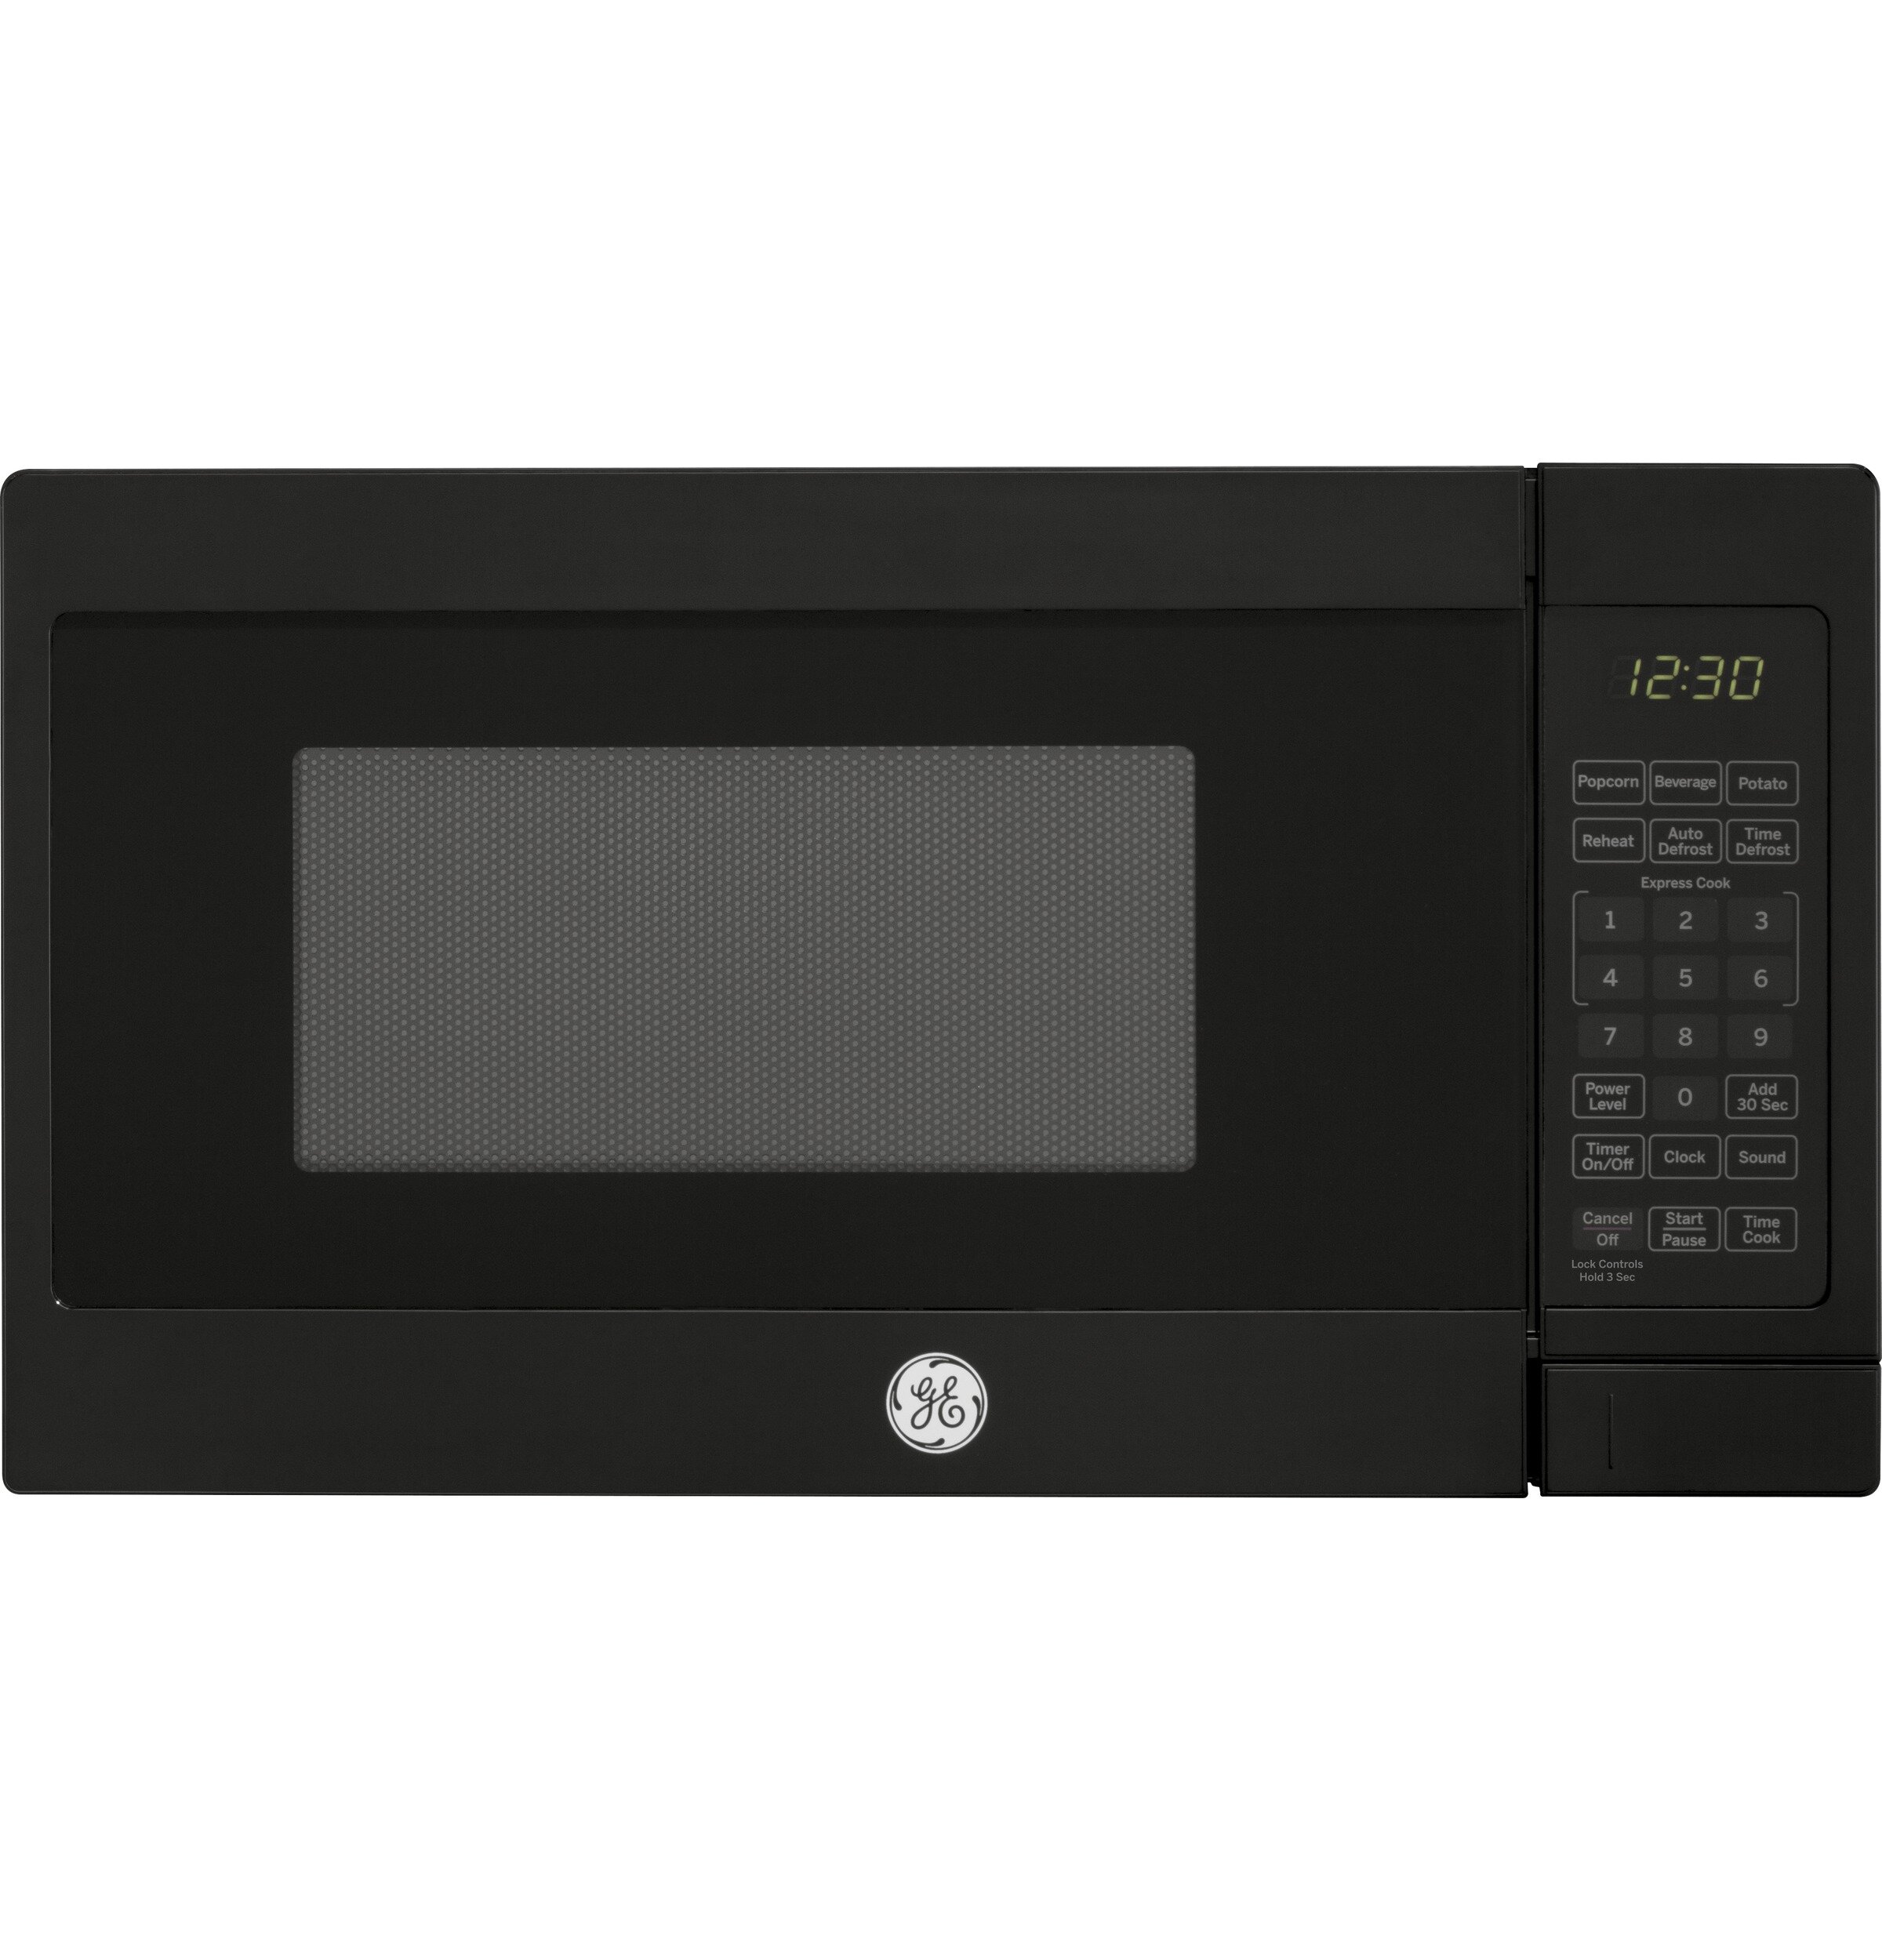 Ge Appliances 17 0 7 Cu Ft Countertop Microwave Reviews Wayfair